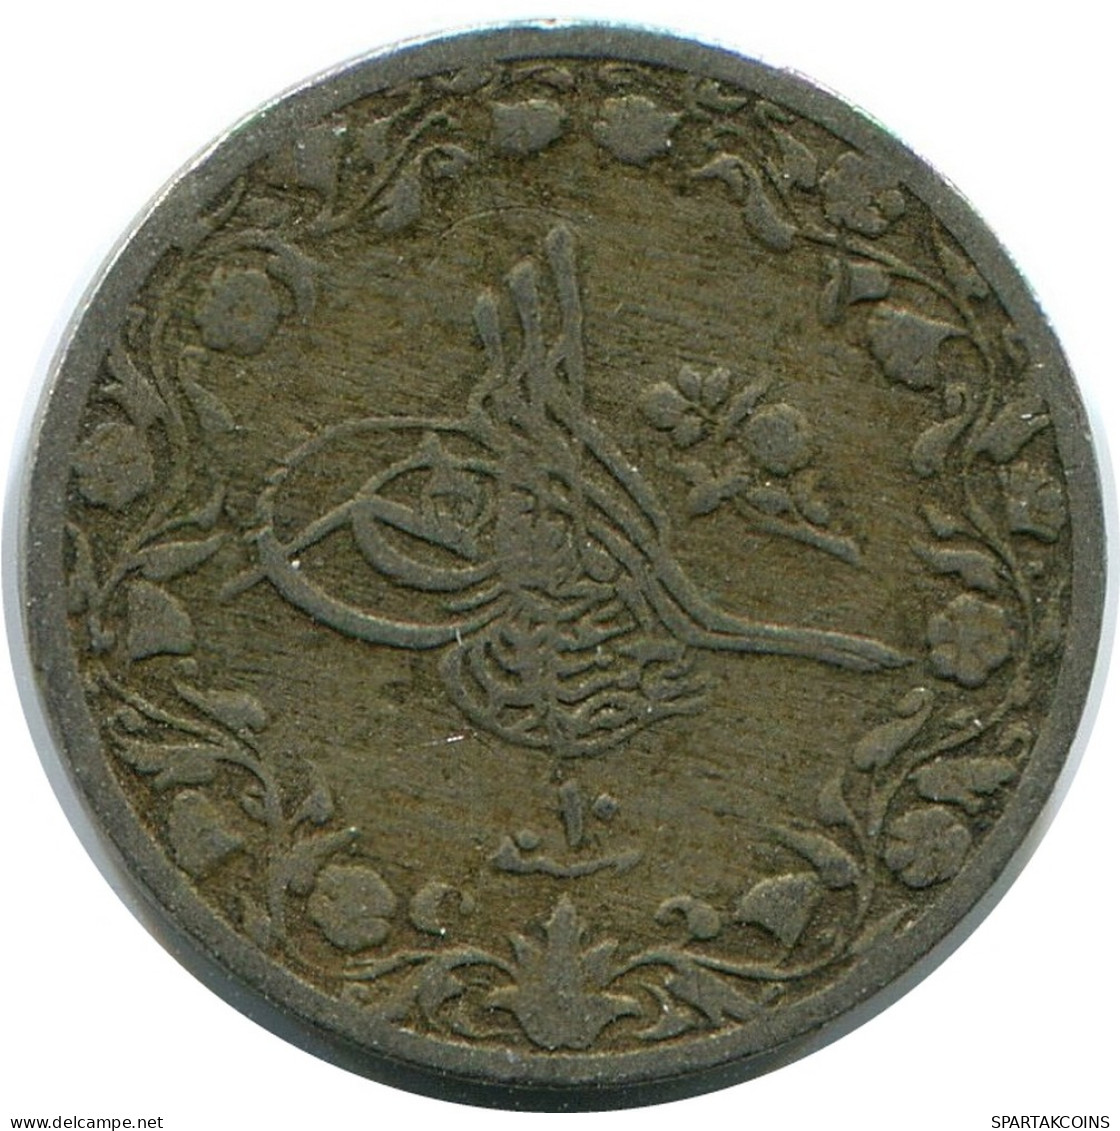 1/10 QIRSH 1884 EGIPTO EGYPT Islámico Moneda #AK345.E - Egypt